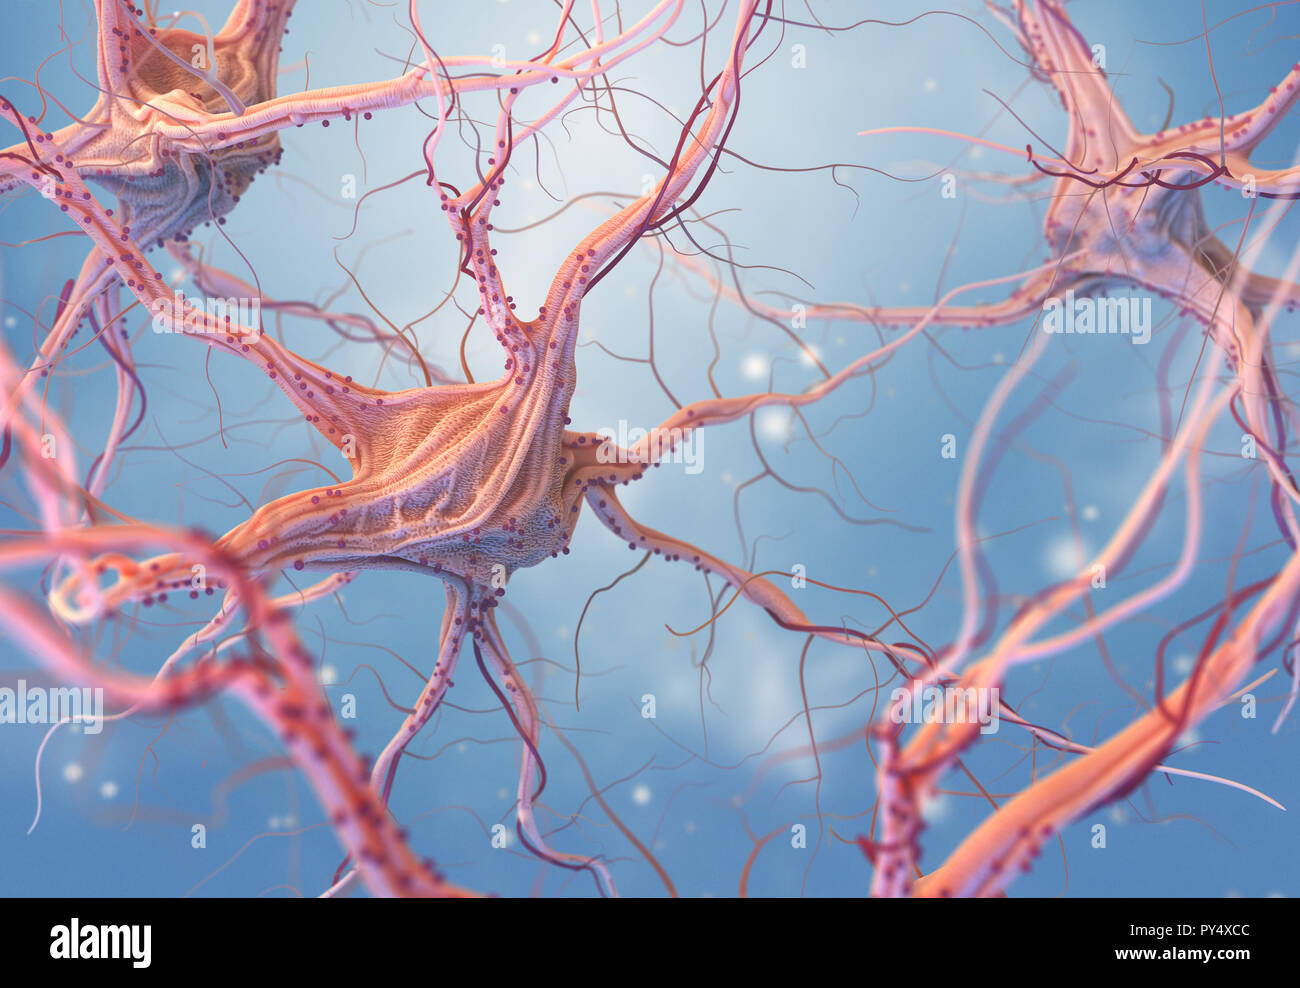 Neurons and nervous system. 3d render of nerve cells. 3D illustration Stock Photo